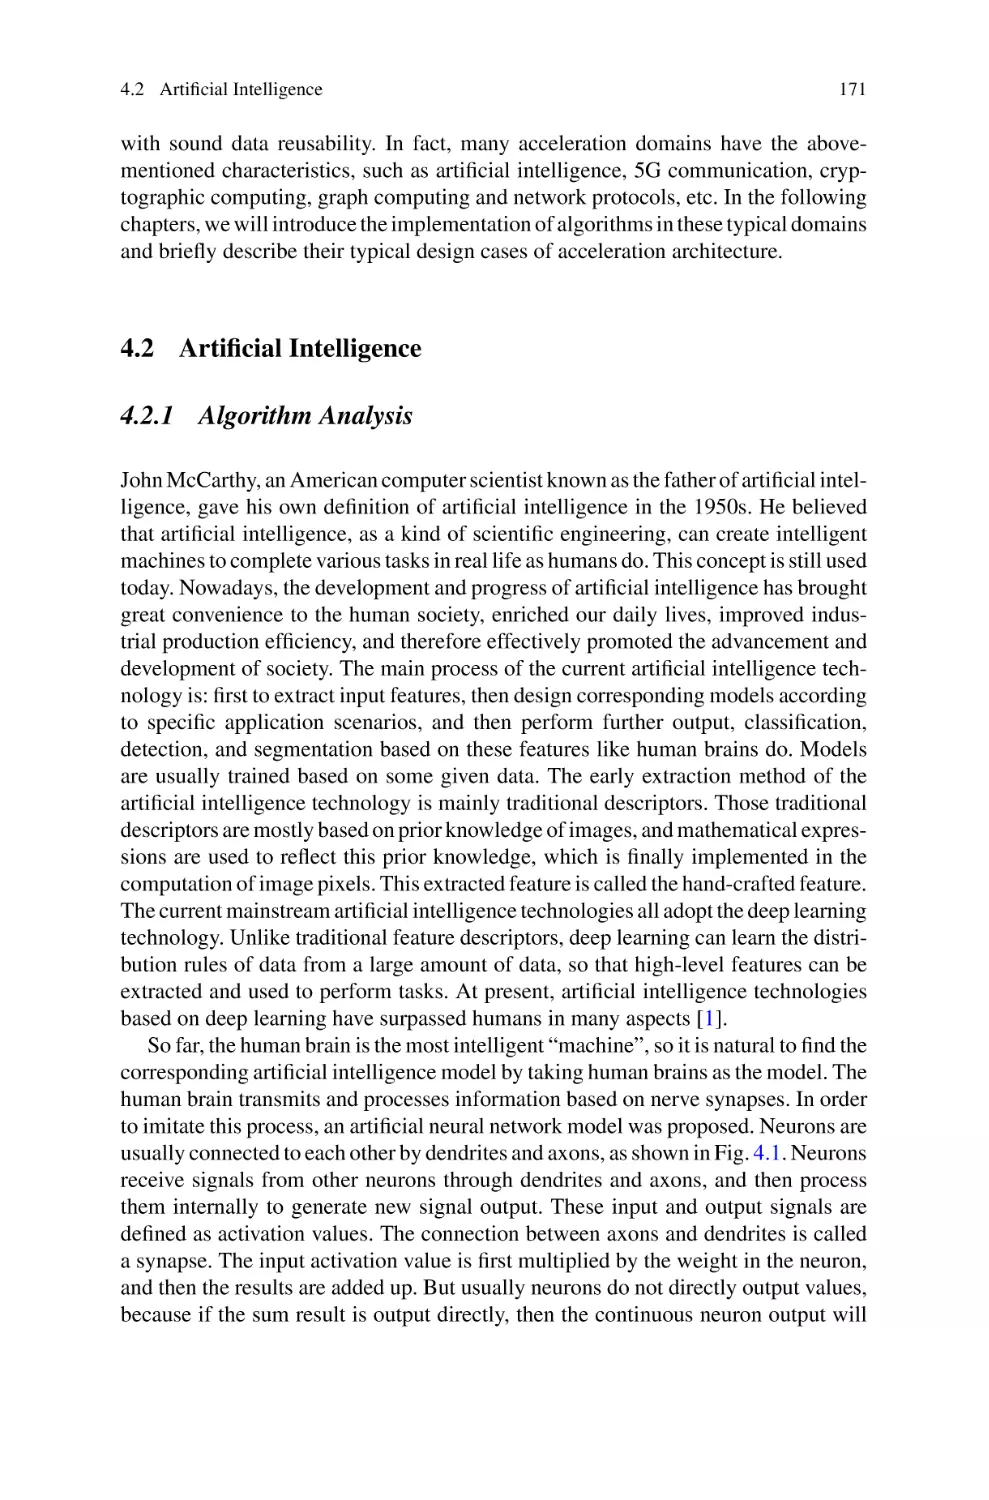 4.2 Artificial Intelligence
4.2.1 Algorithm Analysis